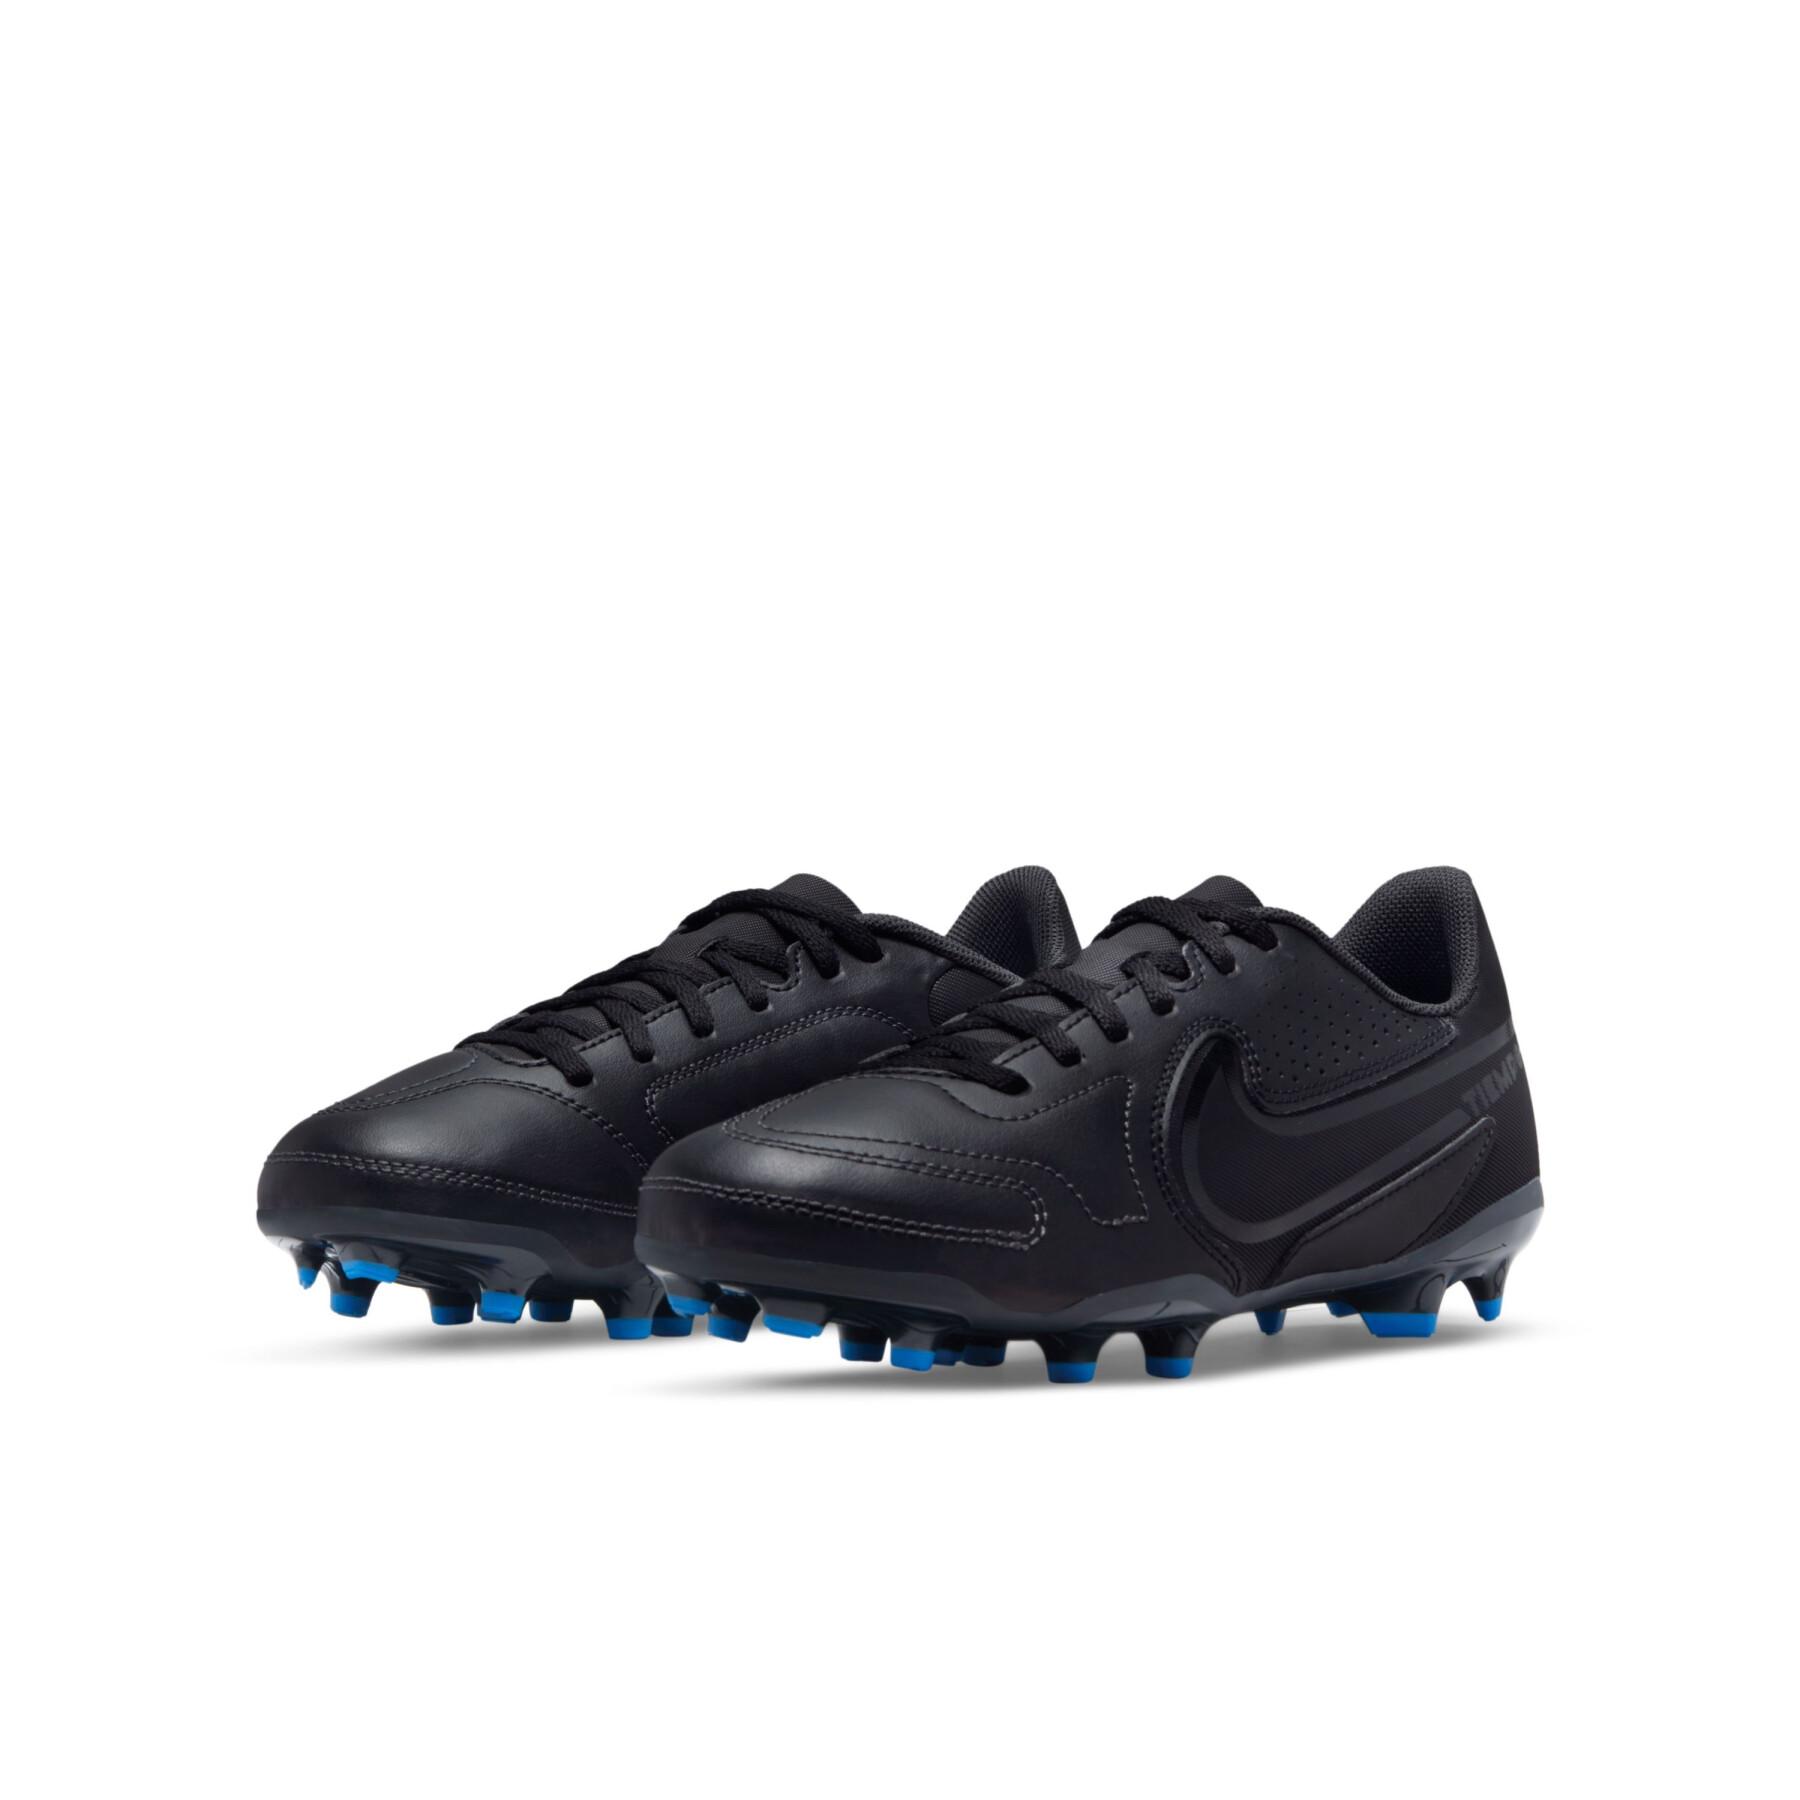 Children's soccer shoes Nike Tiempo Legend 9 Club MG - Shadow Black Pack